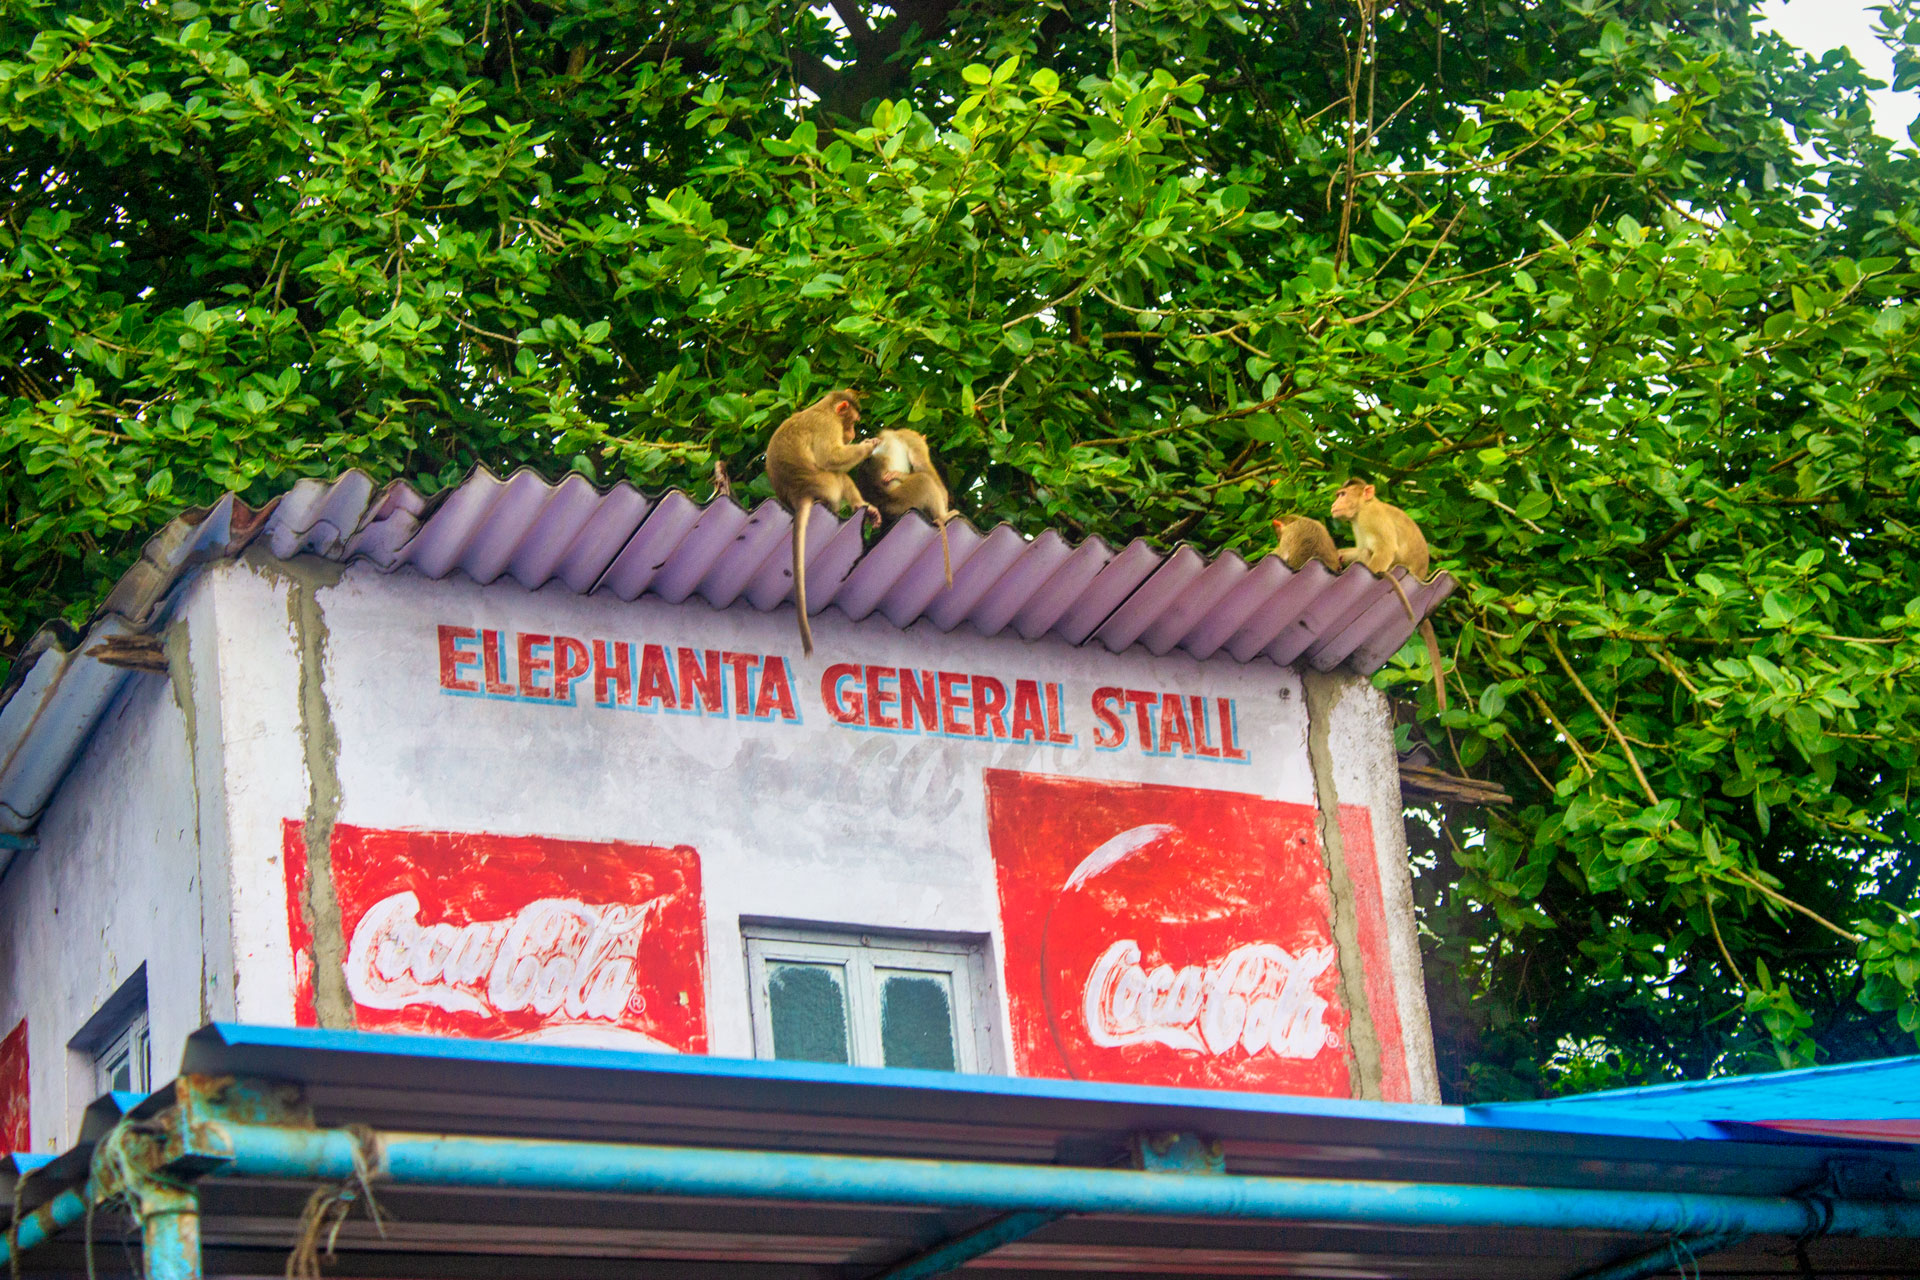 Elephanta General Stall